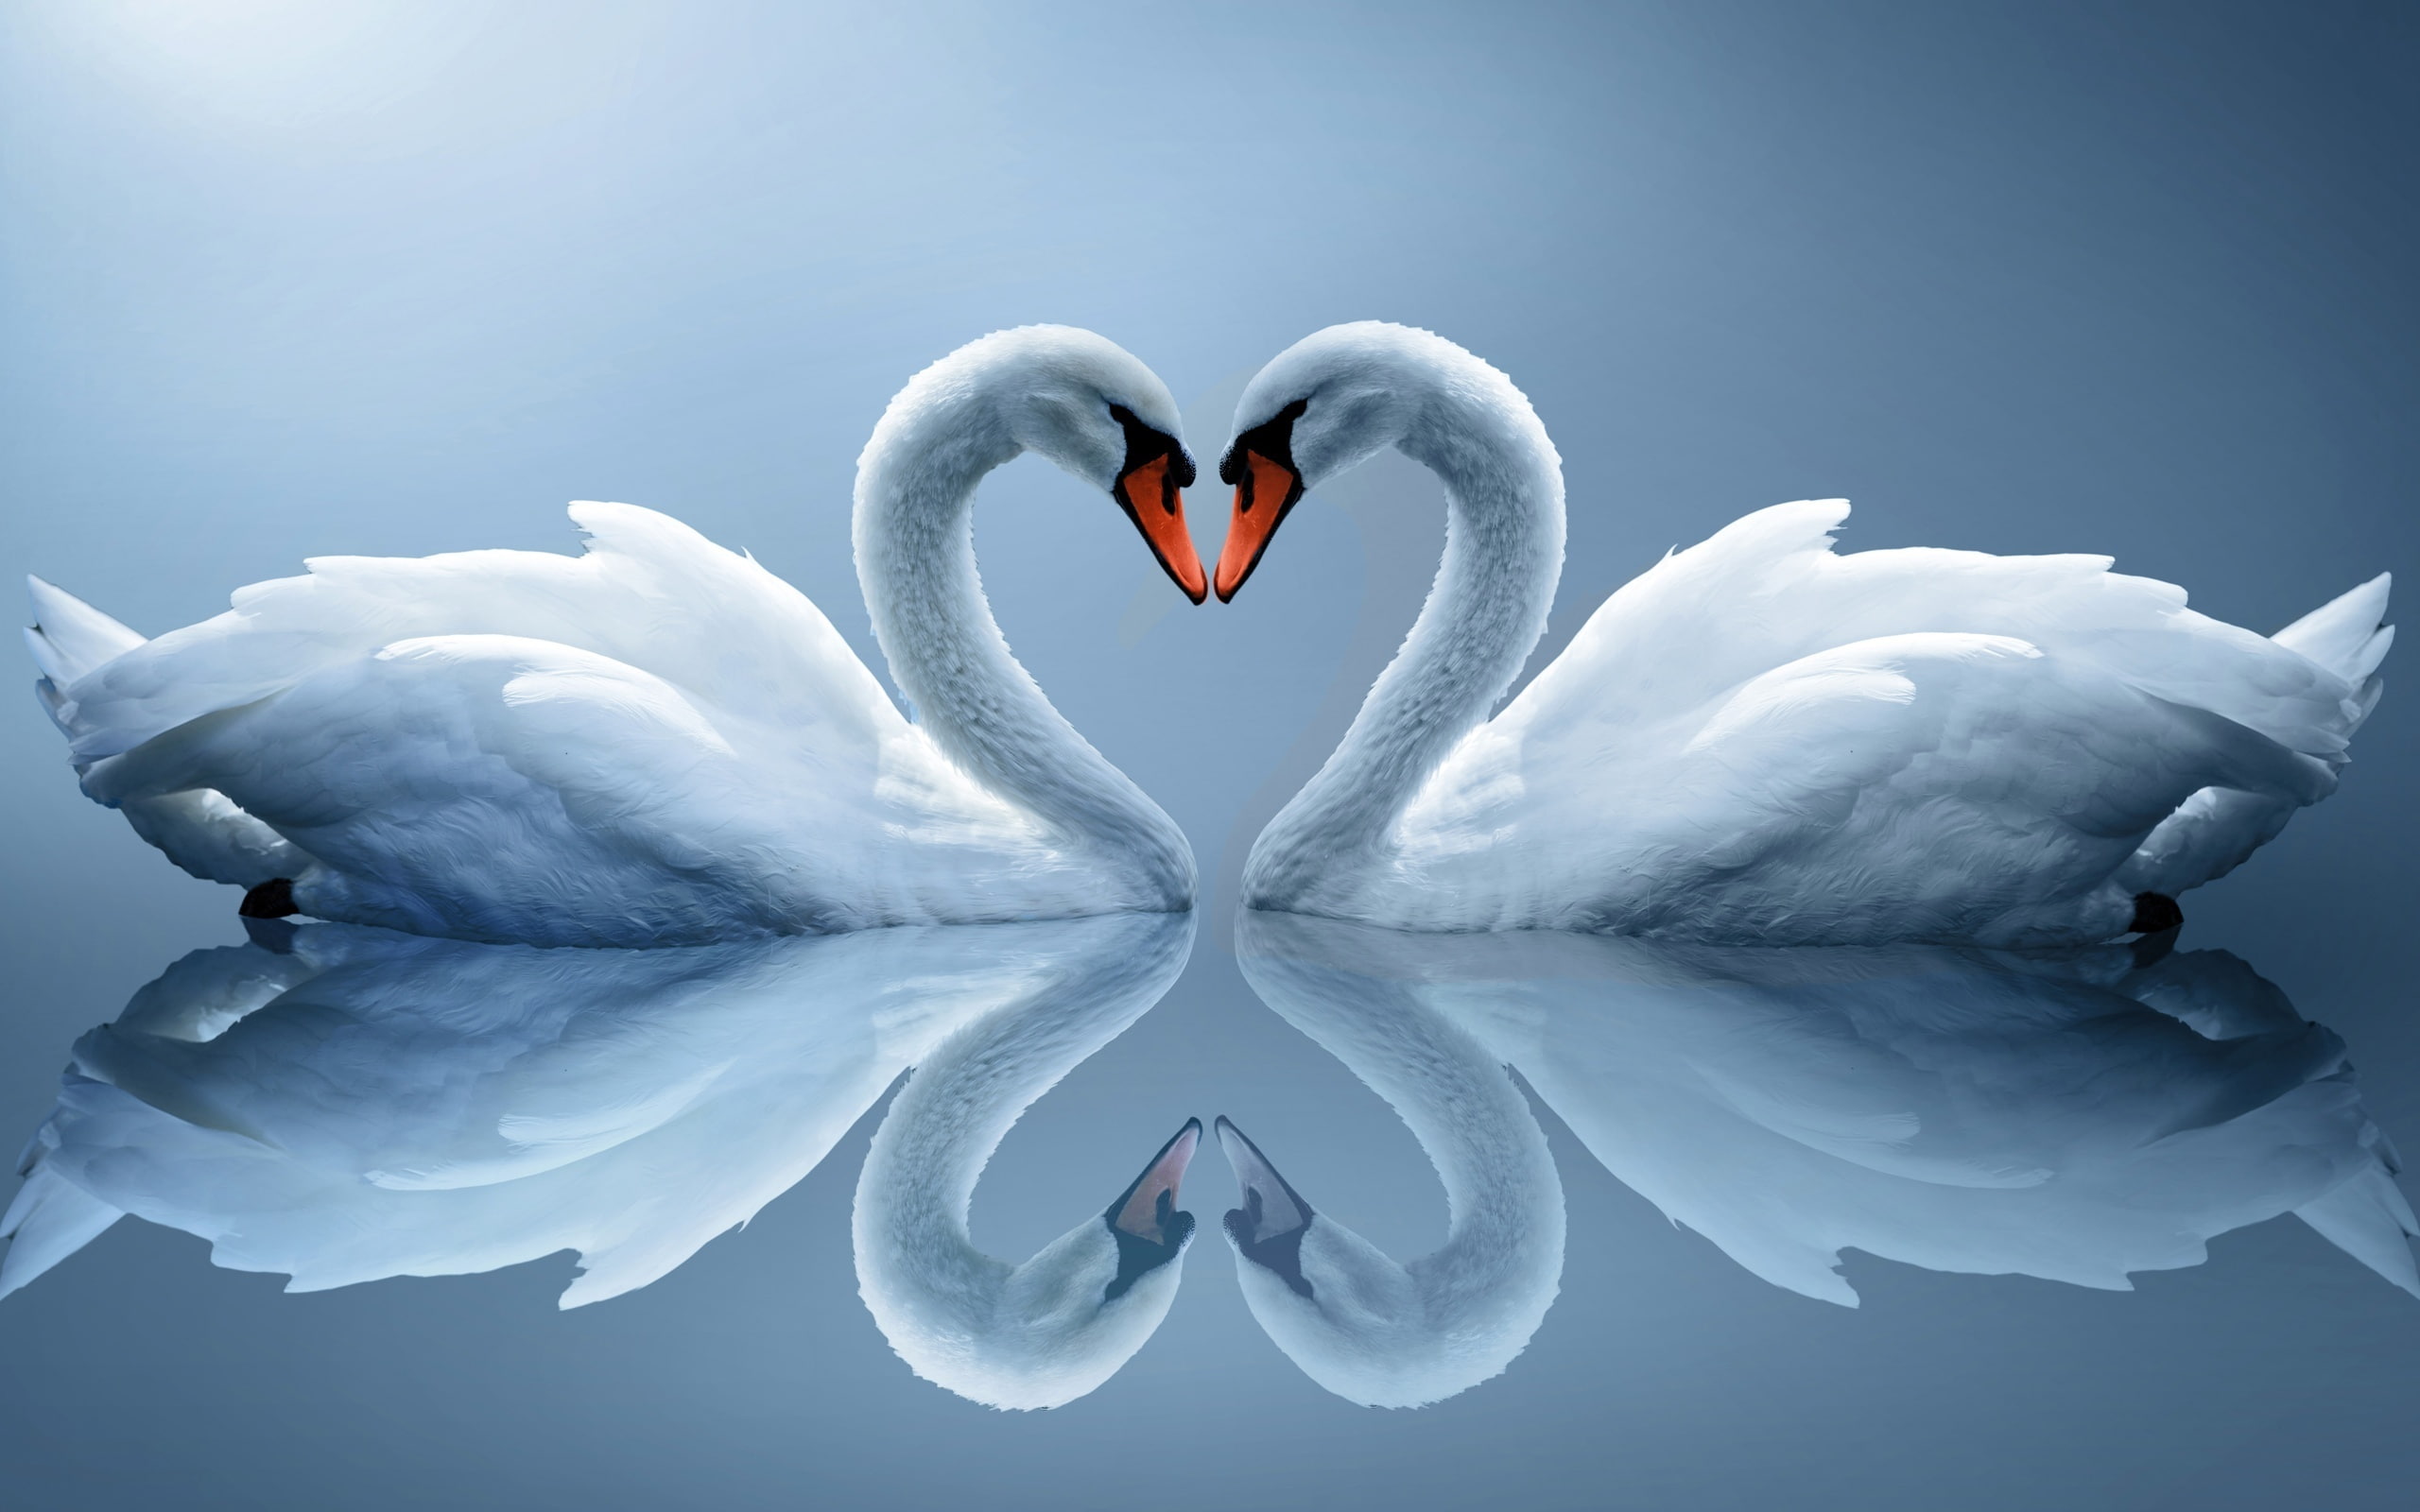 White Swan couple, love heart-shaped, reflection